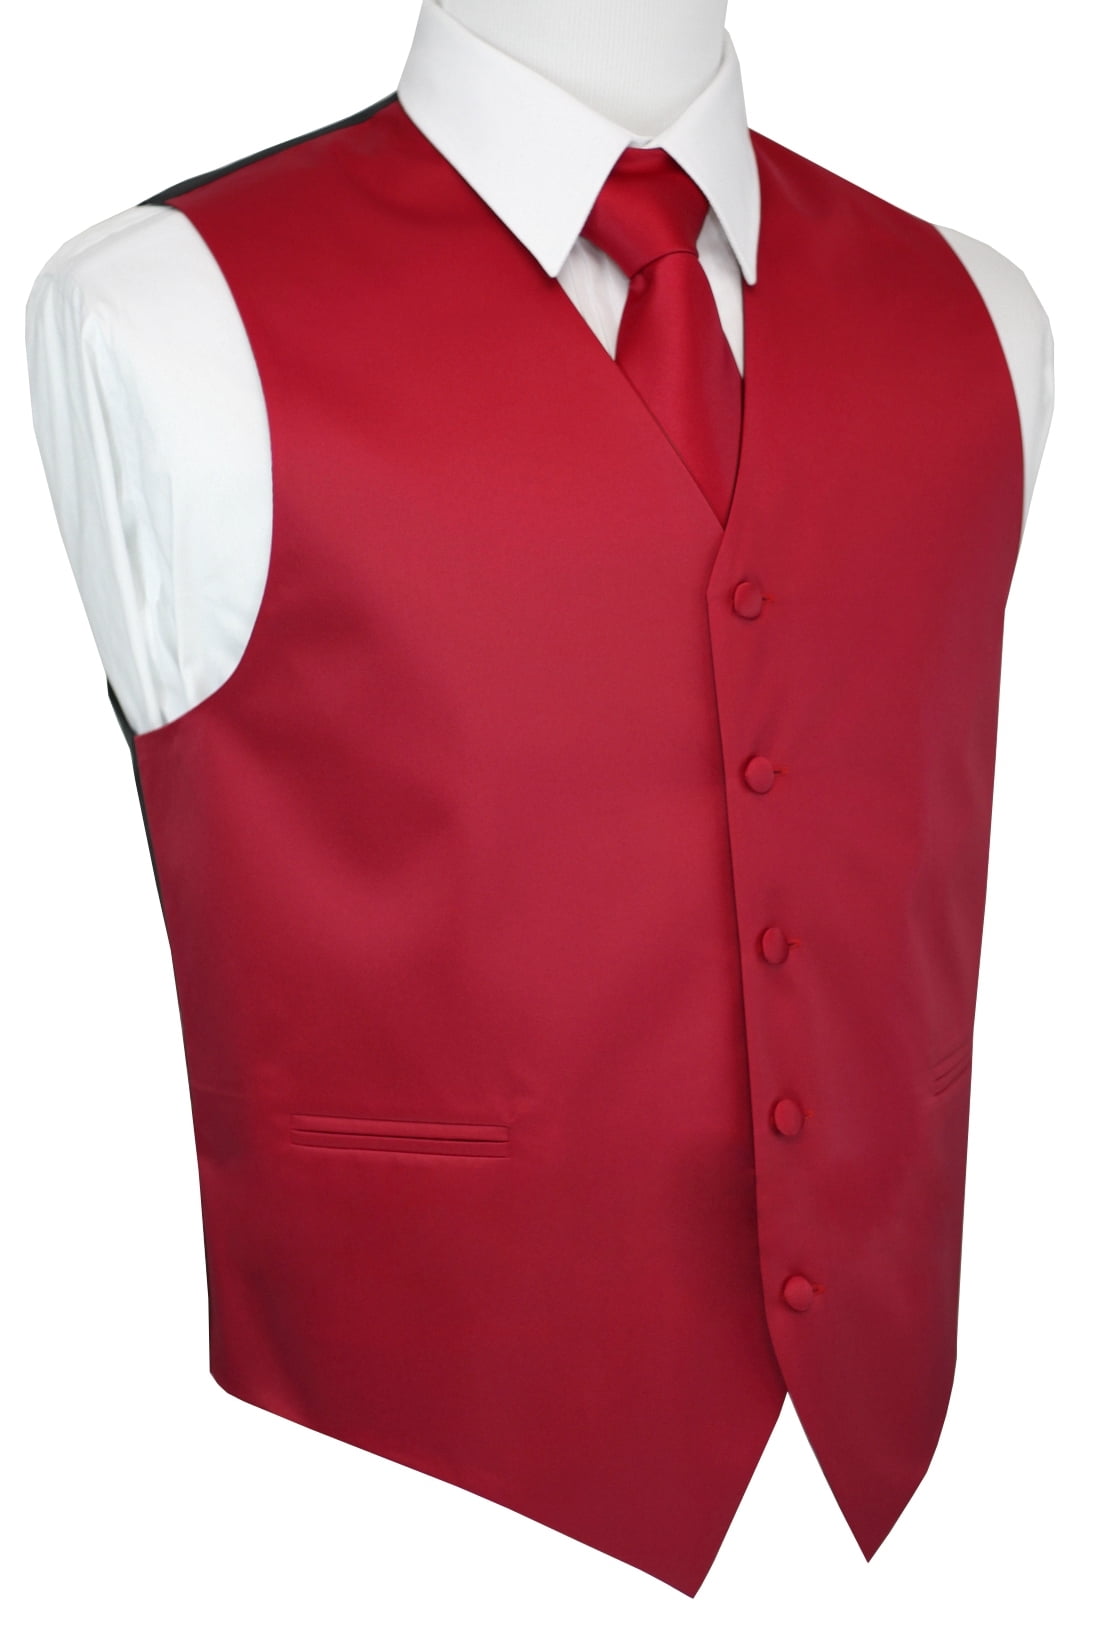 New Men's Tuxedo Vest Vertical Stripes Necktie Hankie set prom party Red 